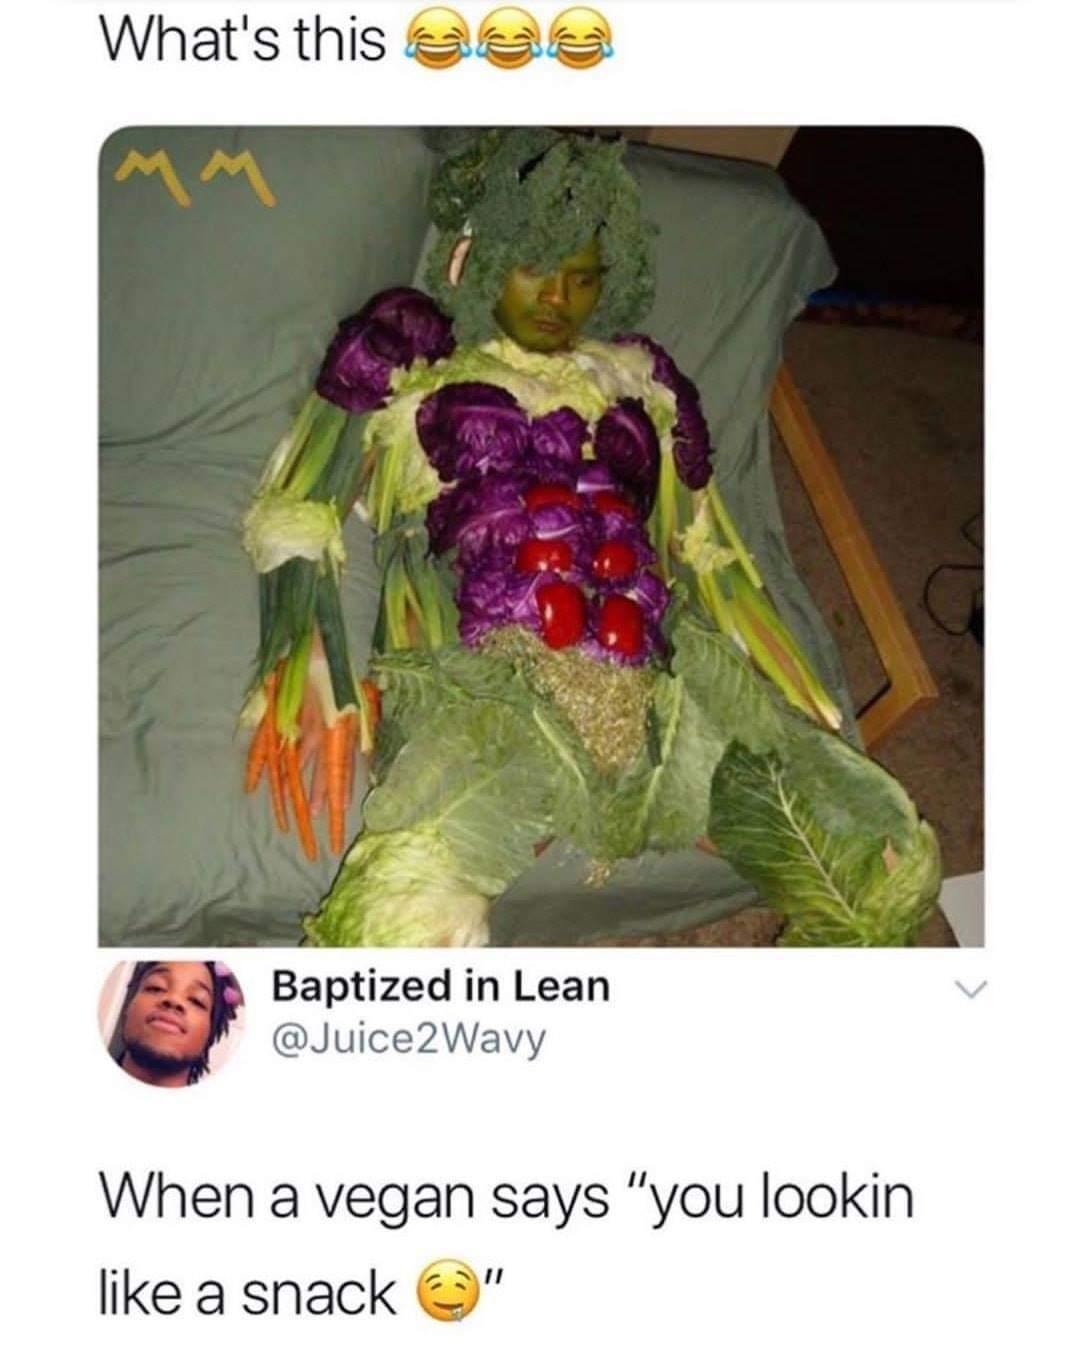 Vegan saying you look like a snack - meme